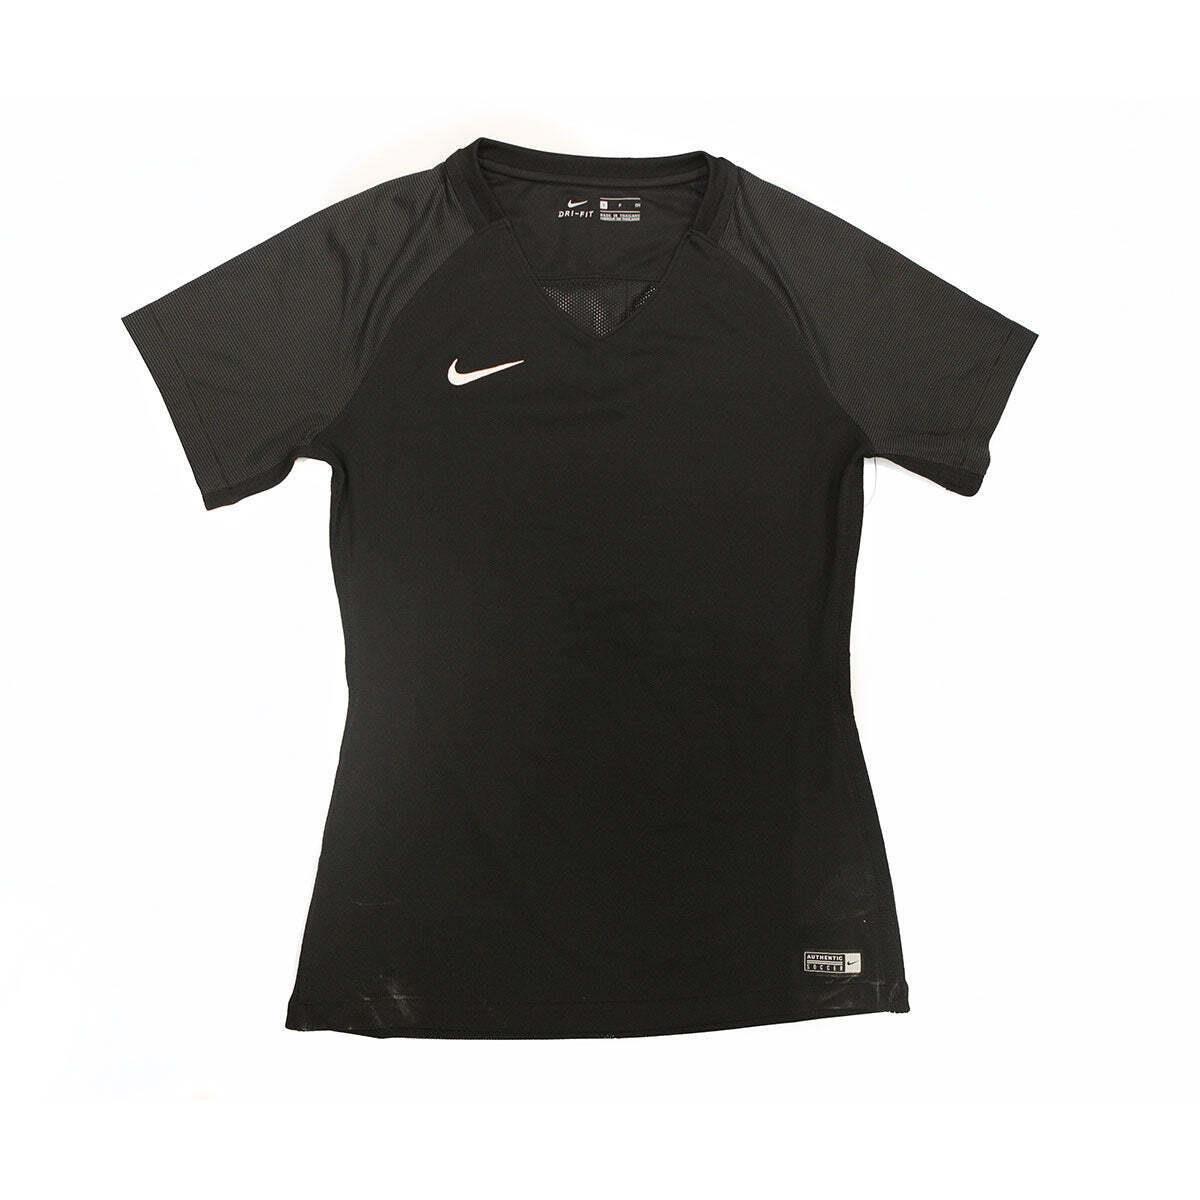 Nike Womens Shirt Revolution Jersey Black Large Soccer Short Sleeve V-neck